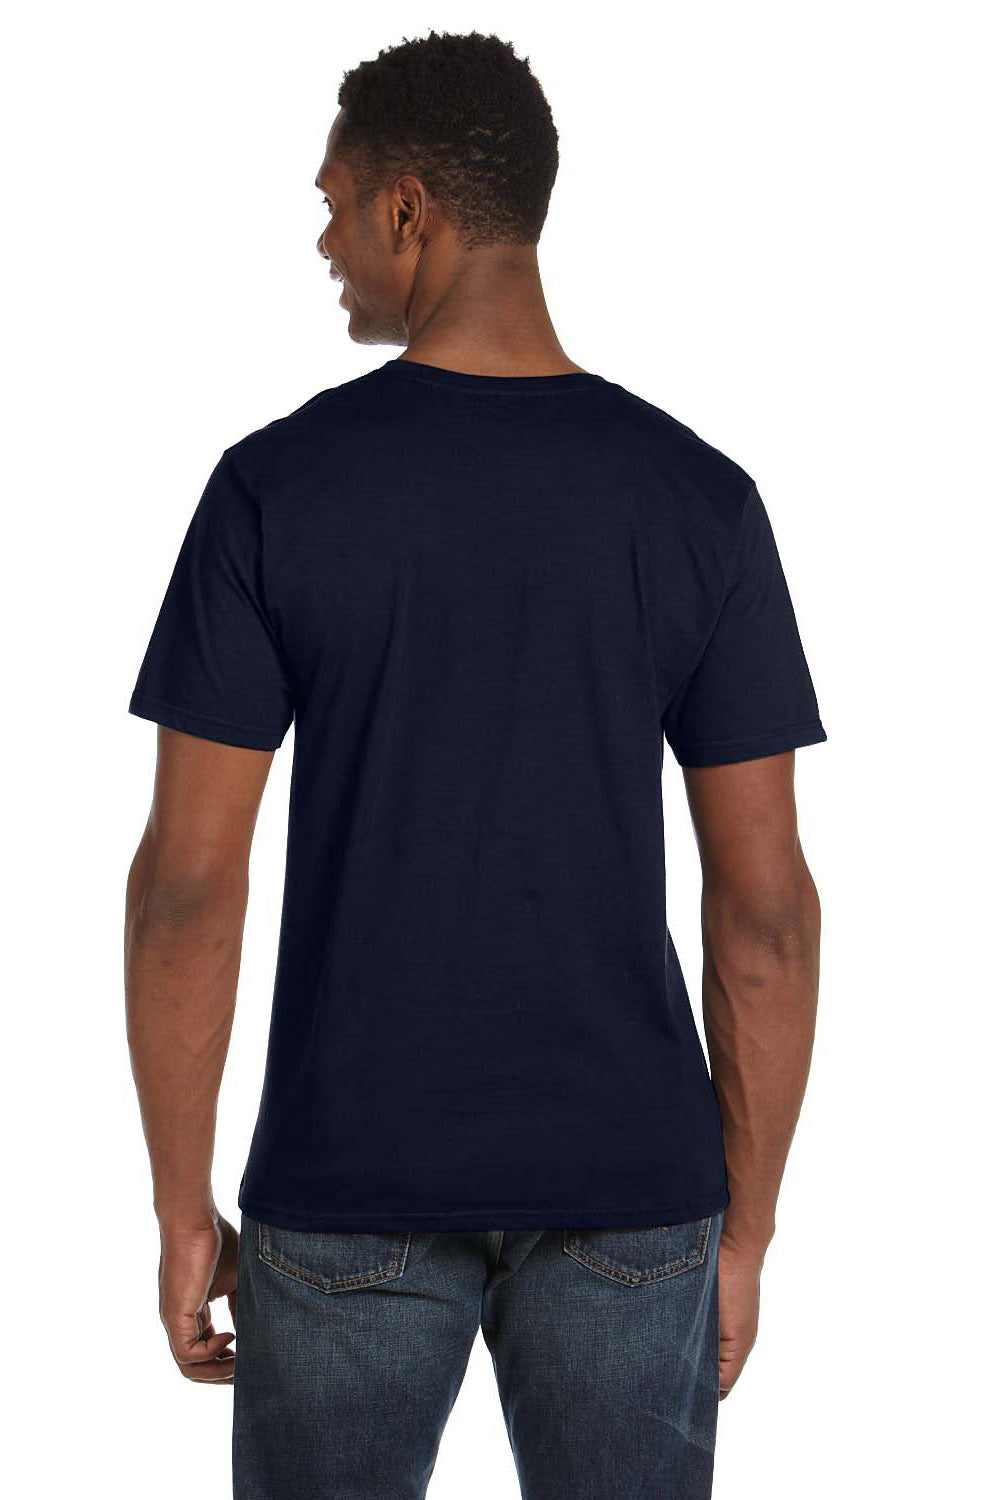 Anvil 982 Mens Short Sleeve V-Neck T-Shirt Navy Blue Back